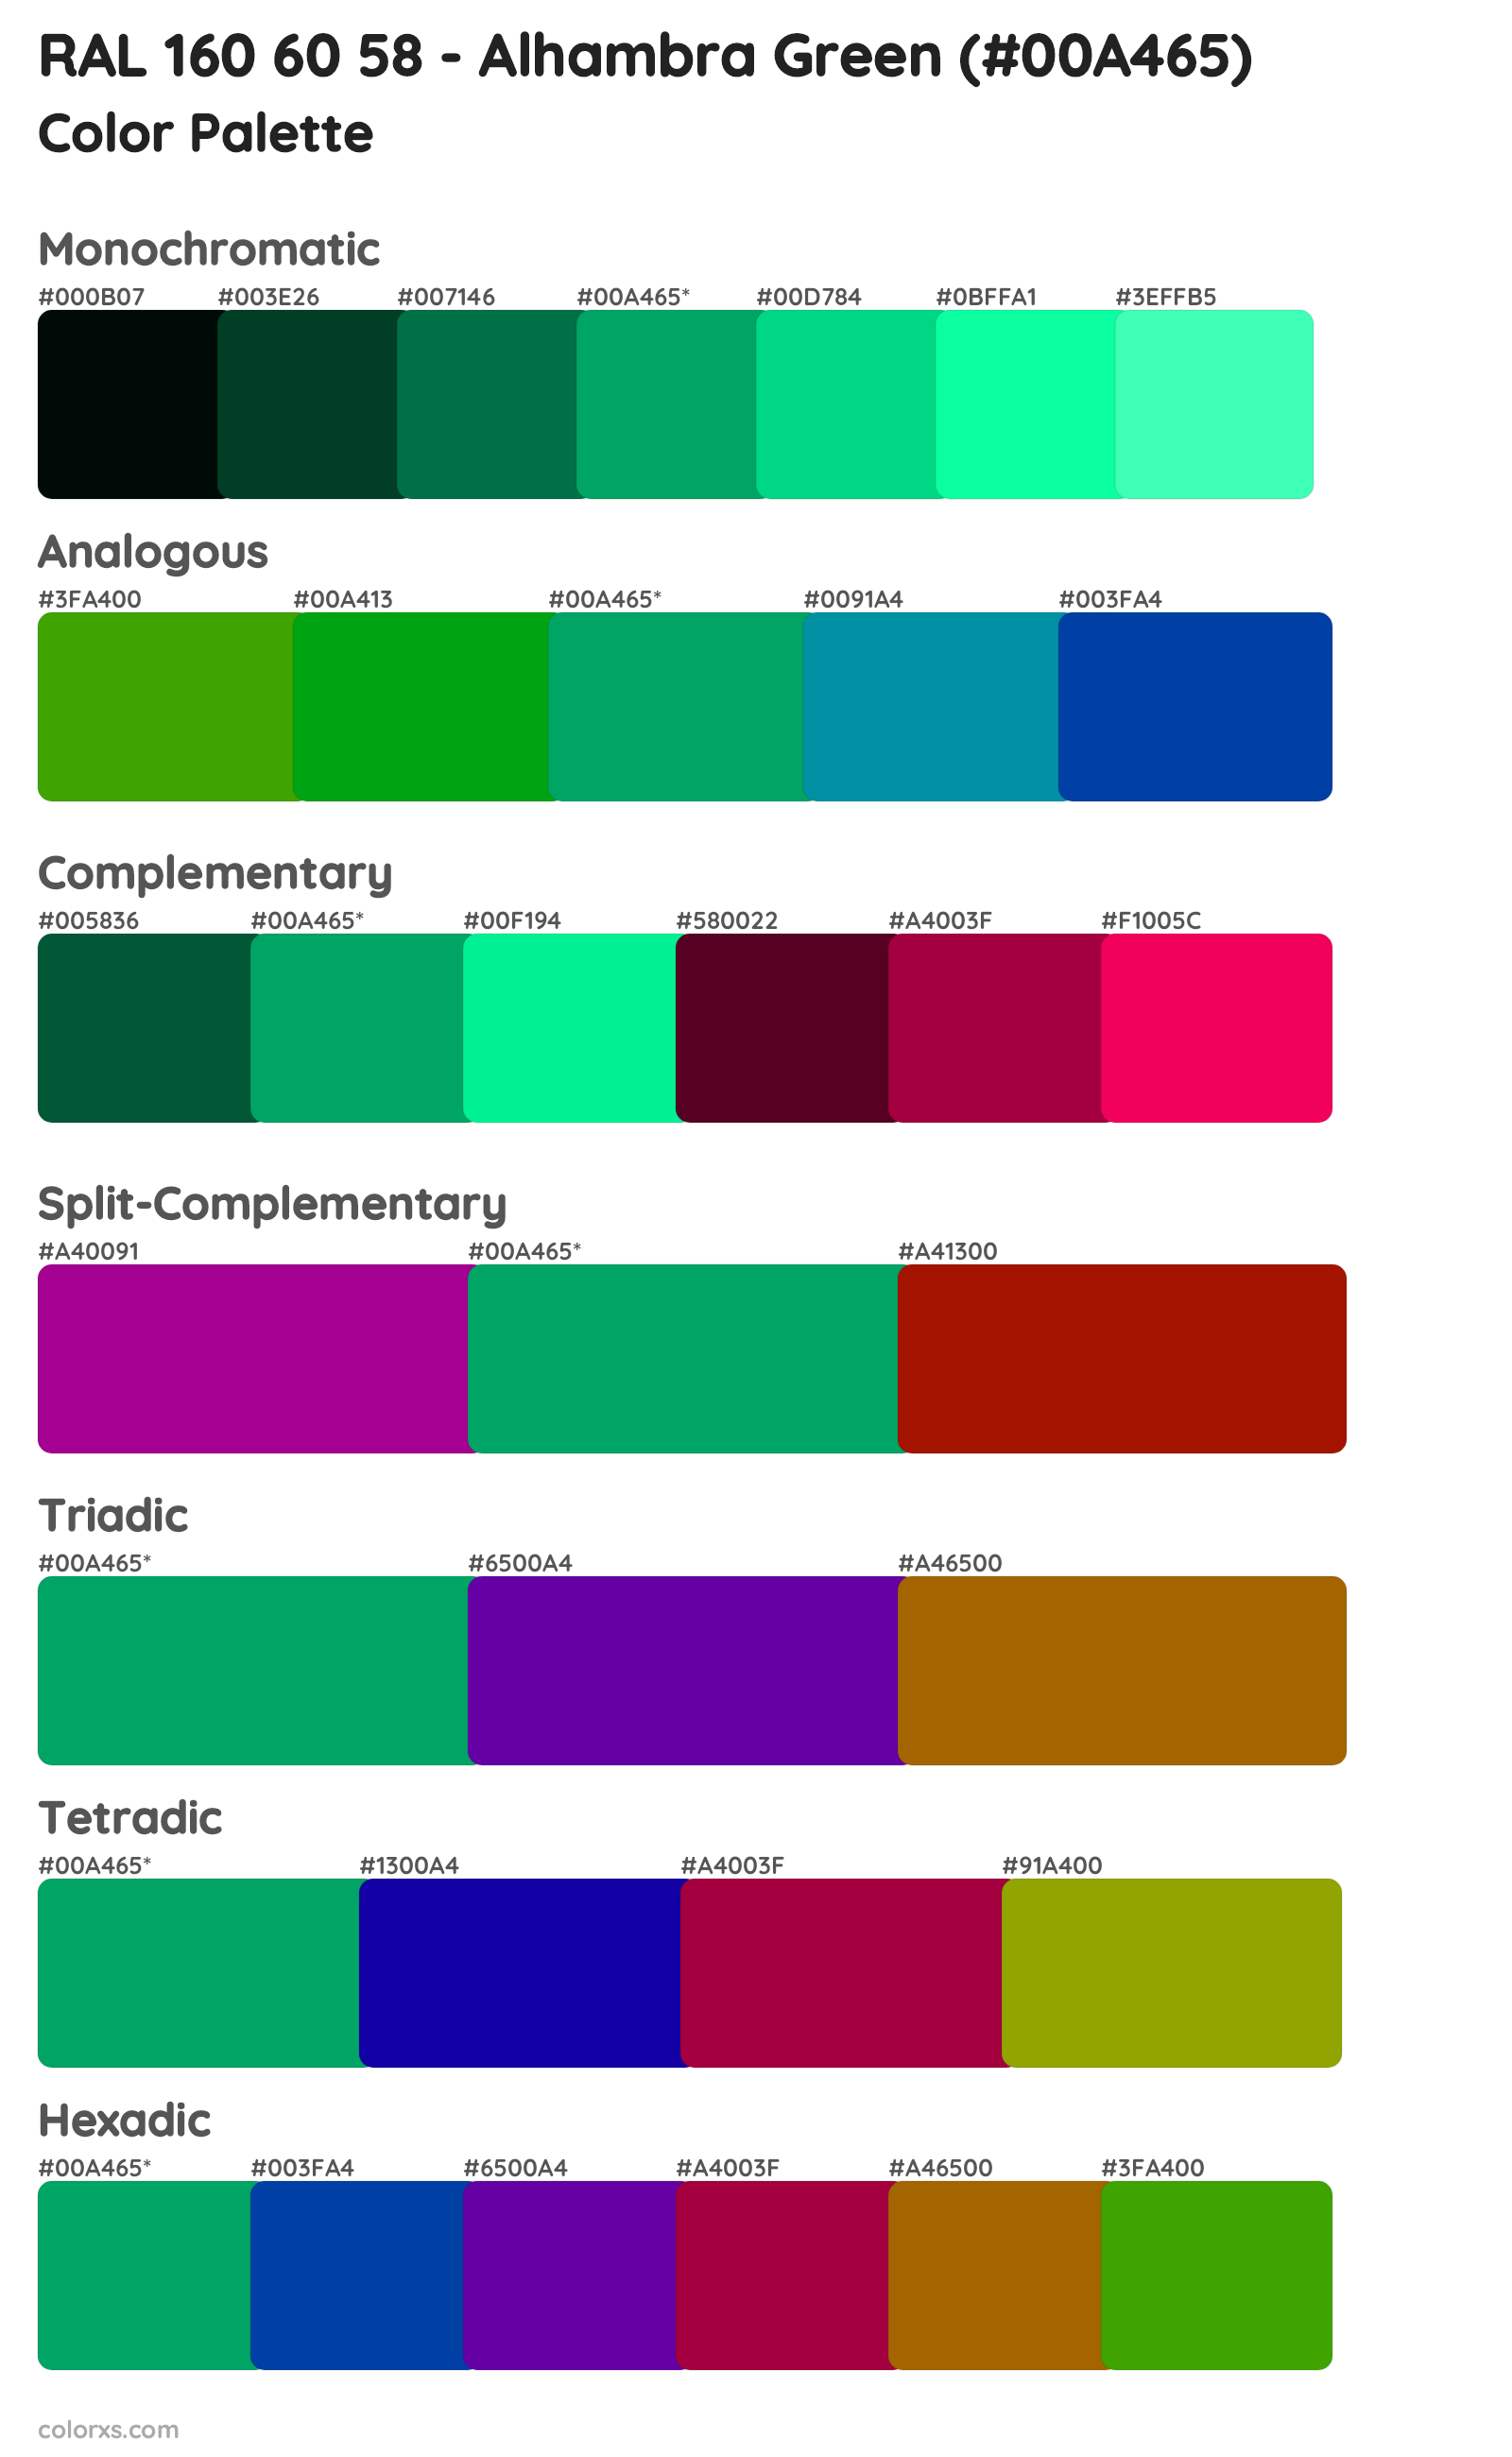 RAL 160 60 58 - Alhambra Green Color Scheme Palettes